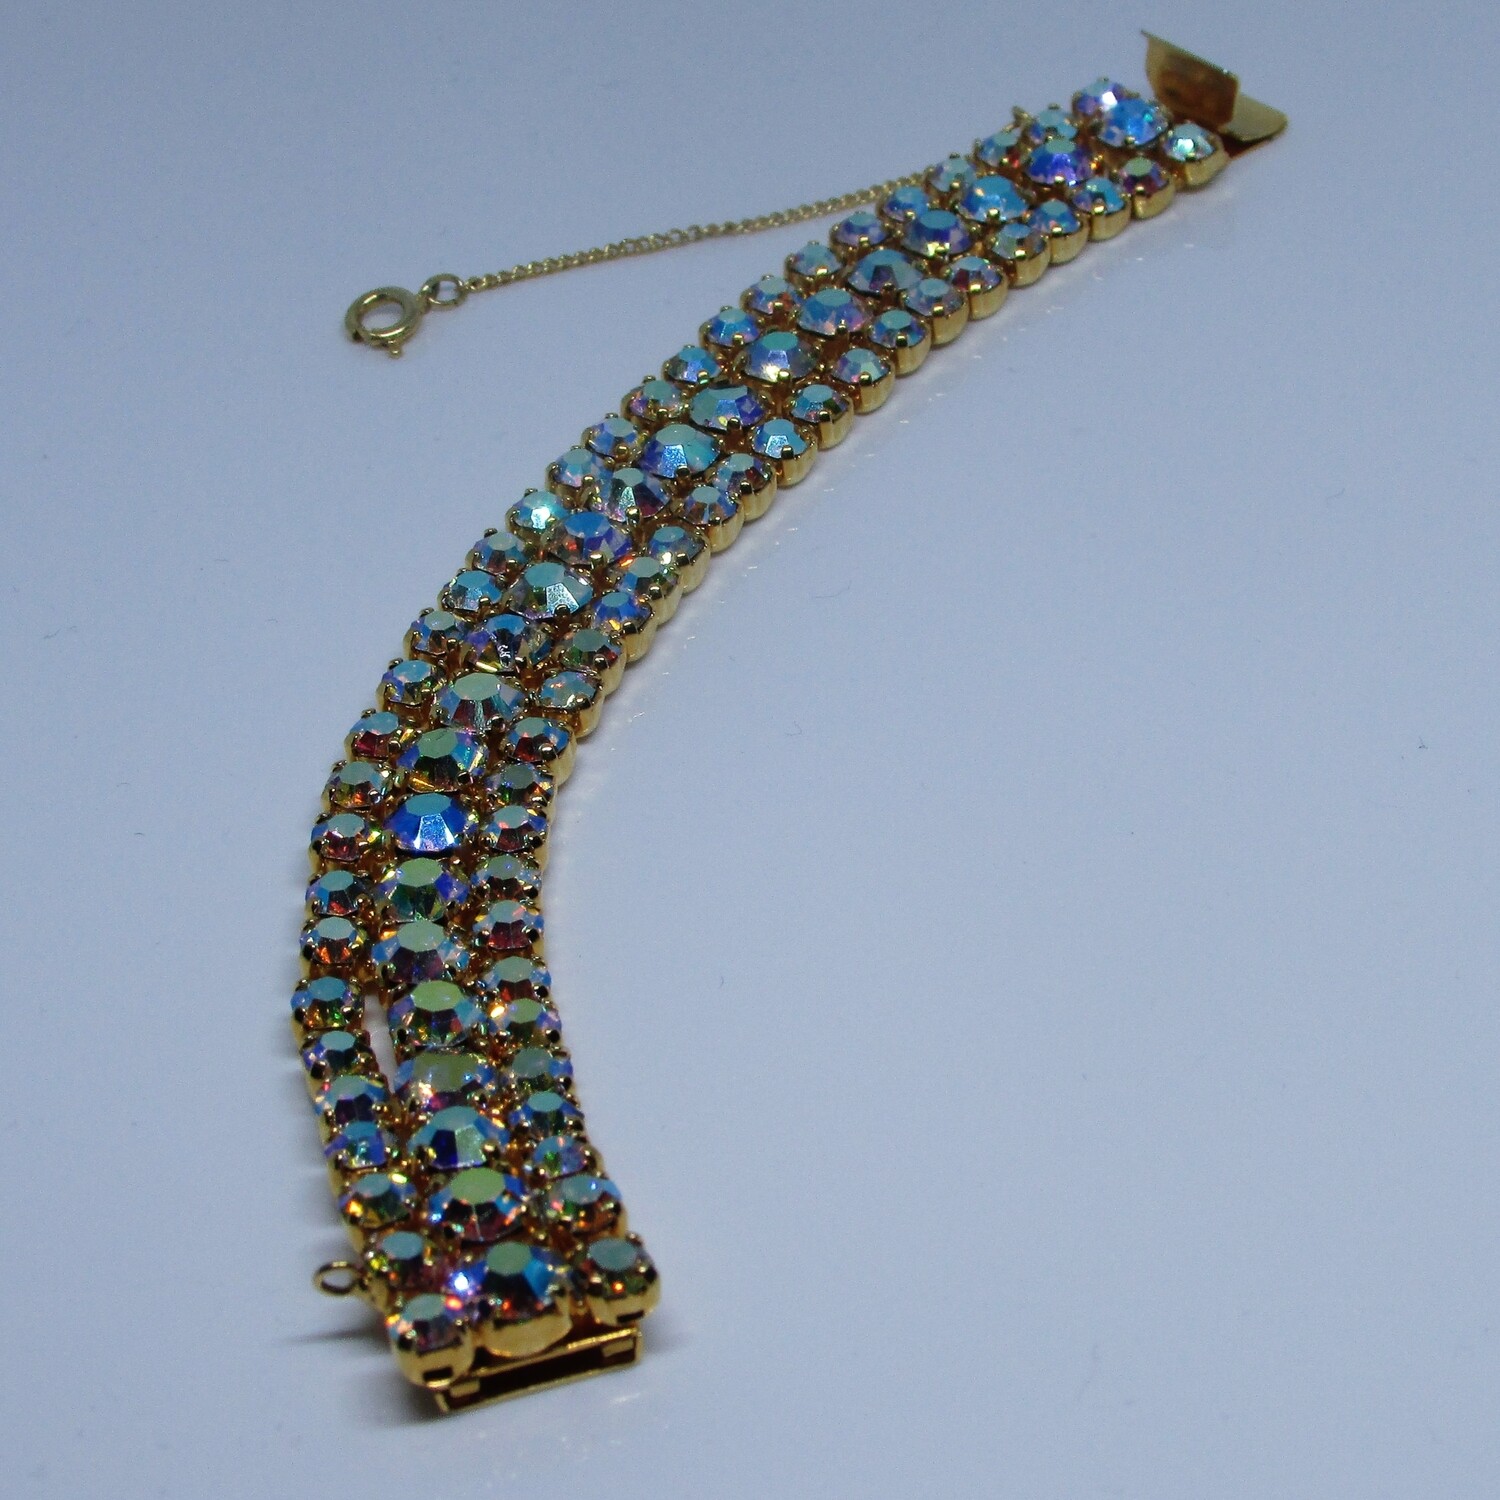 Sparkling Irridescent Art Deco Aurora Borealis Gold Bracelet with Safety Chain c. 1950's